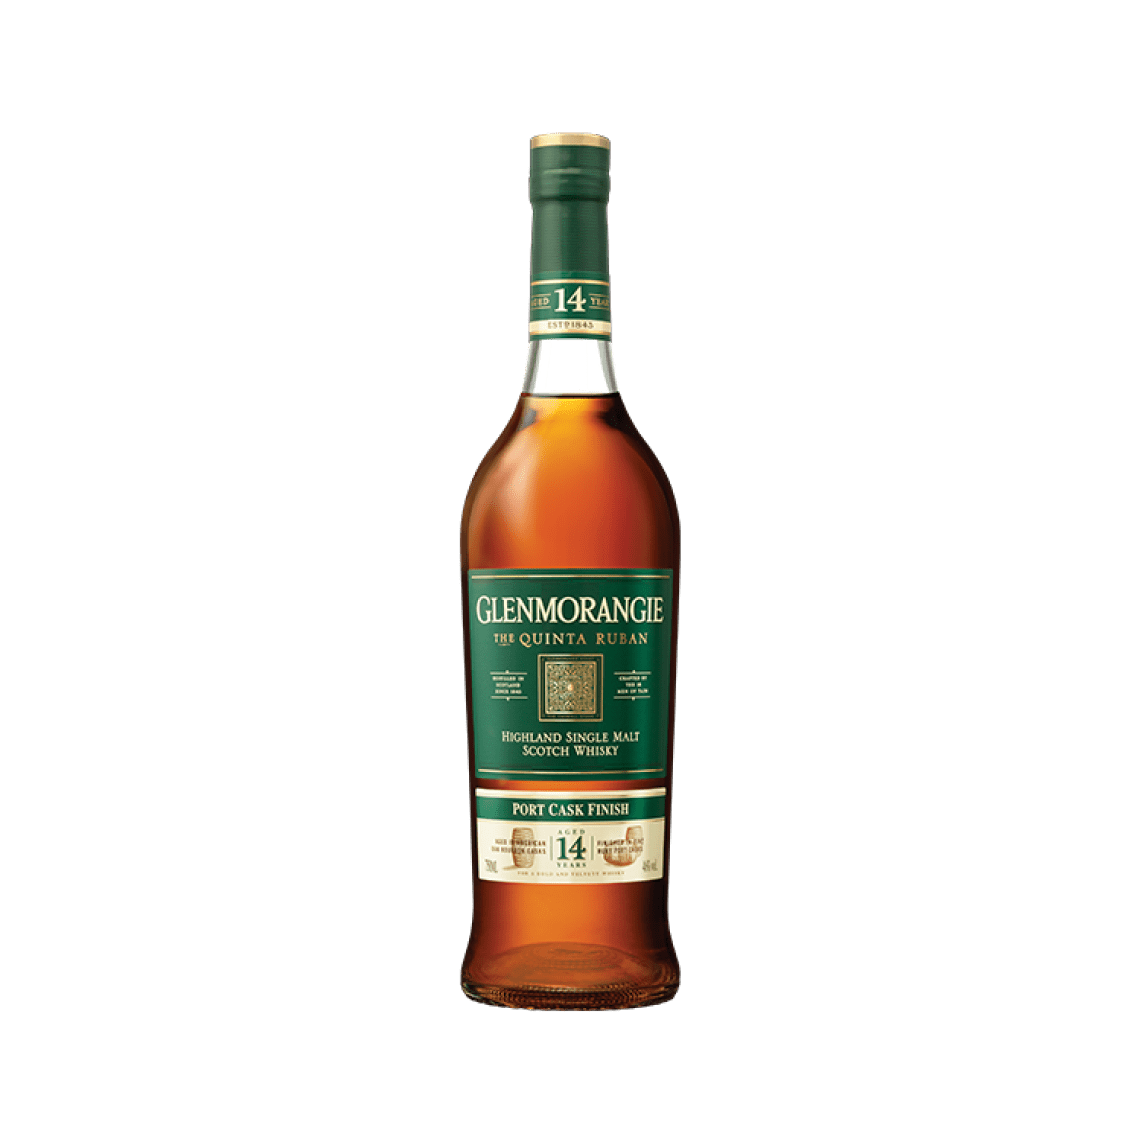 Glenmorangie 12 Year Single Malt Scotch Whisky The Quinta Ruban